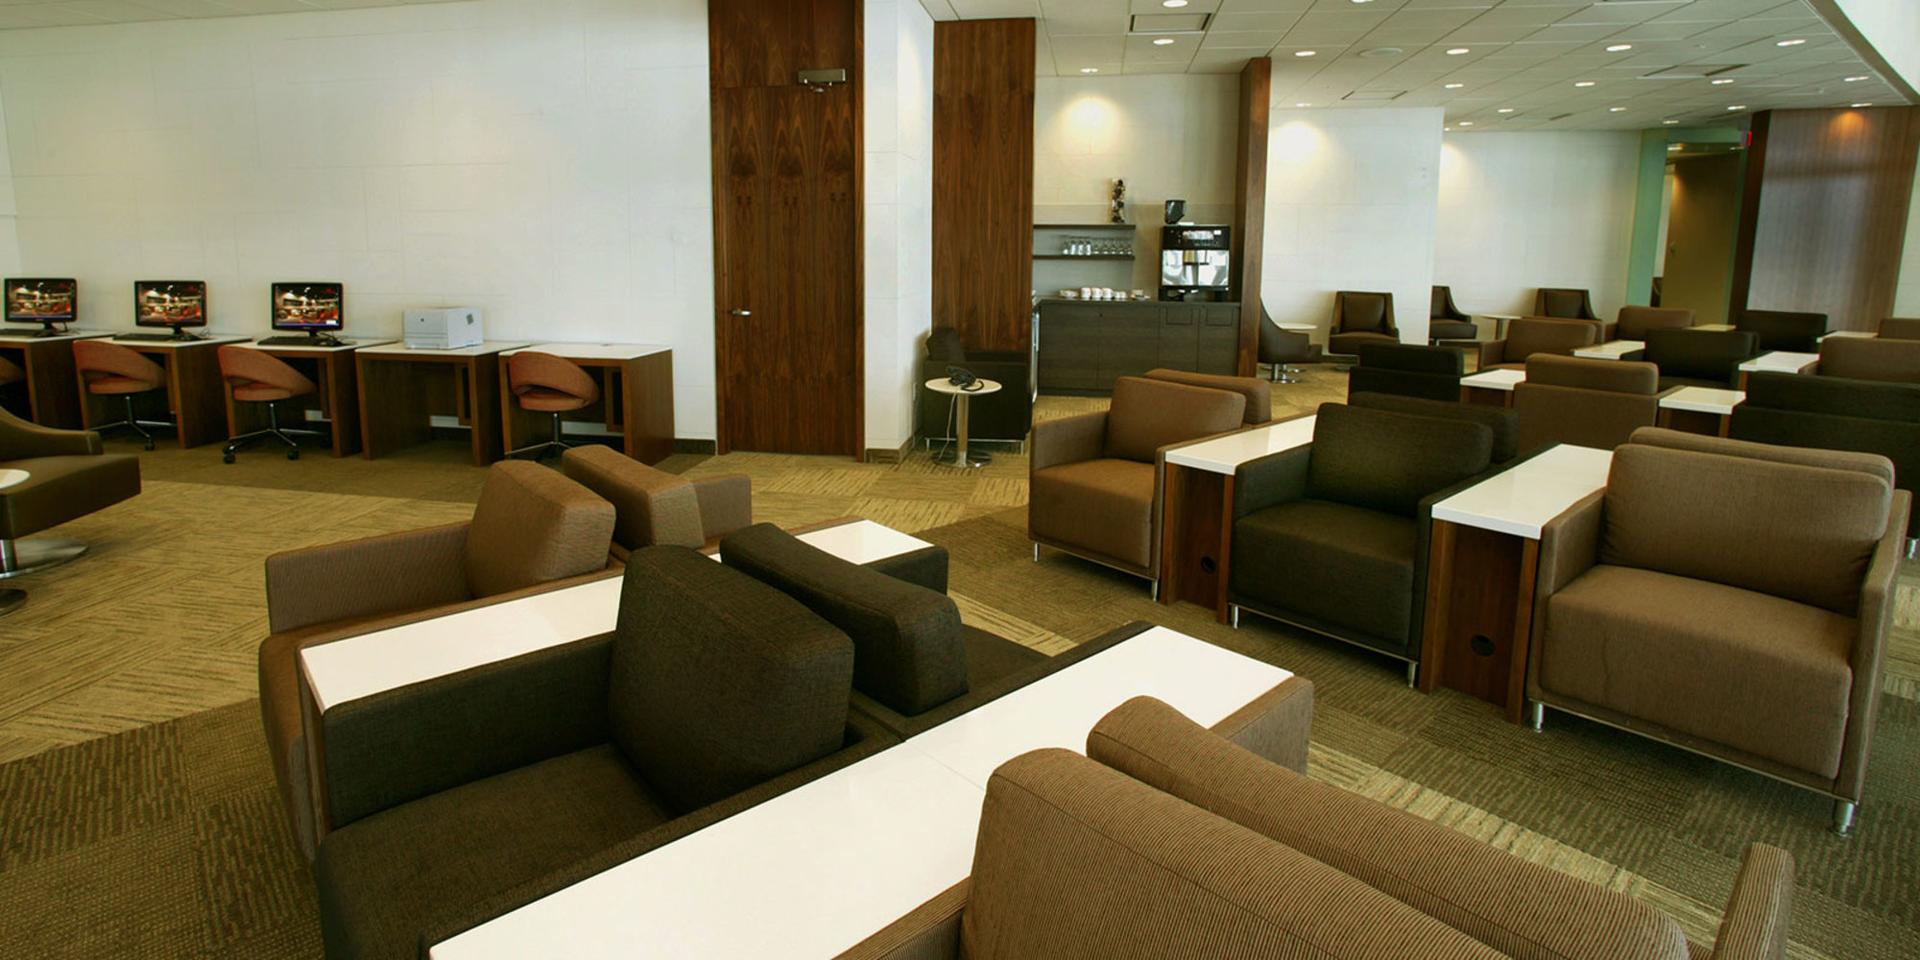 Plaza Premium Lounge image 1 of 37